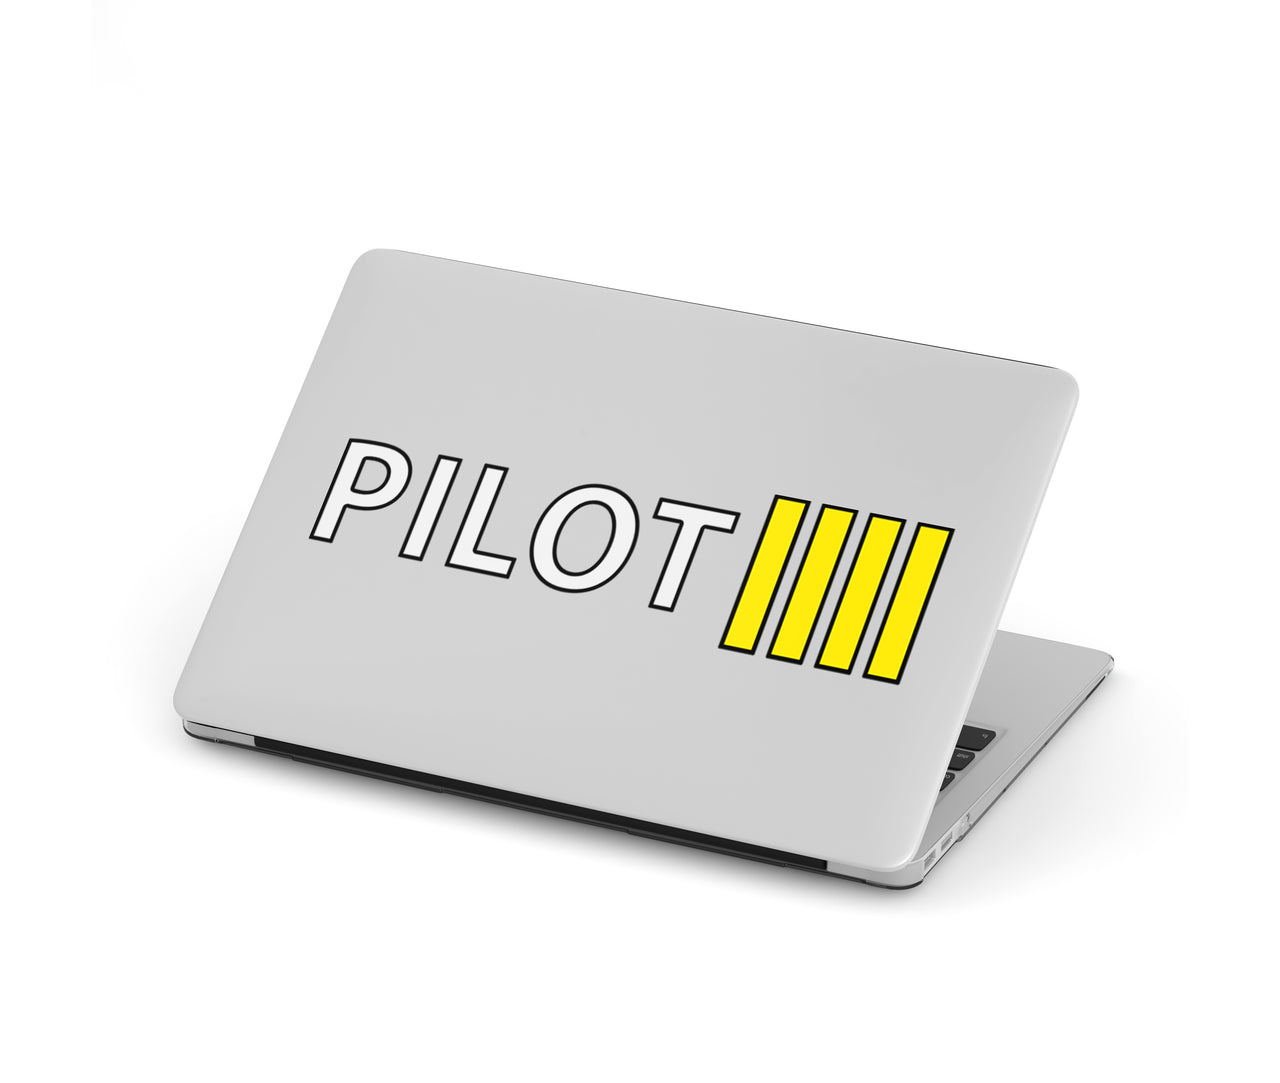 Pilot & Stripes (4 Lines) Designed Macbook Cases